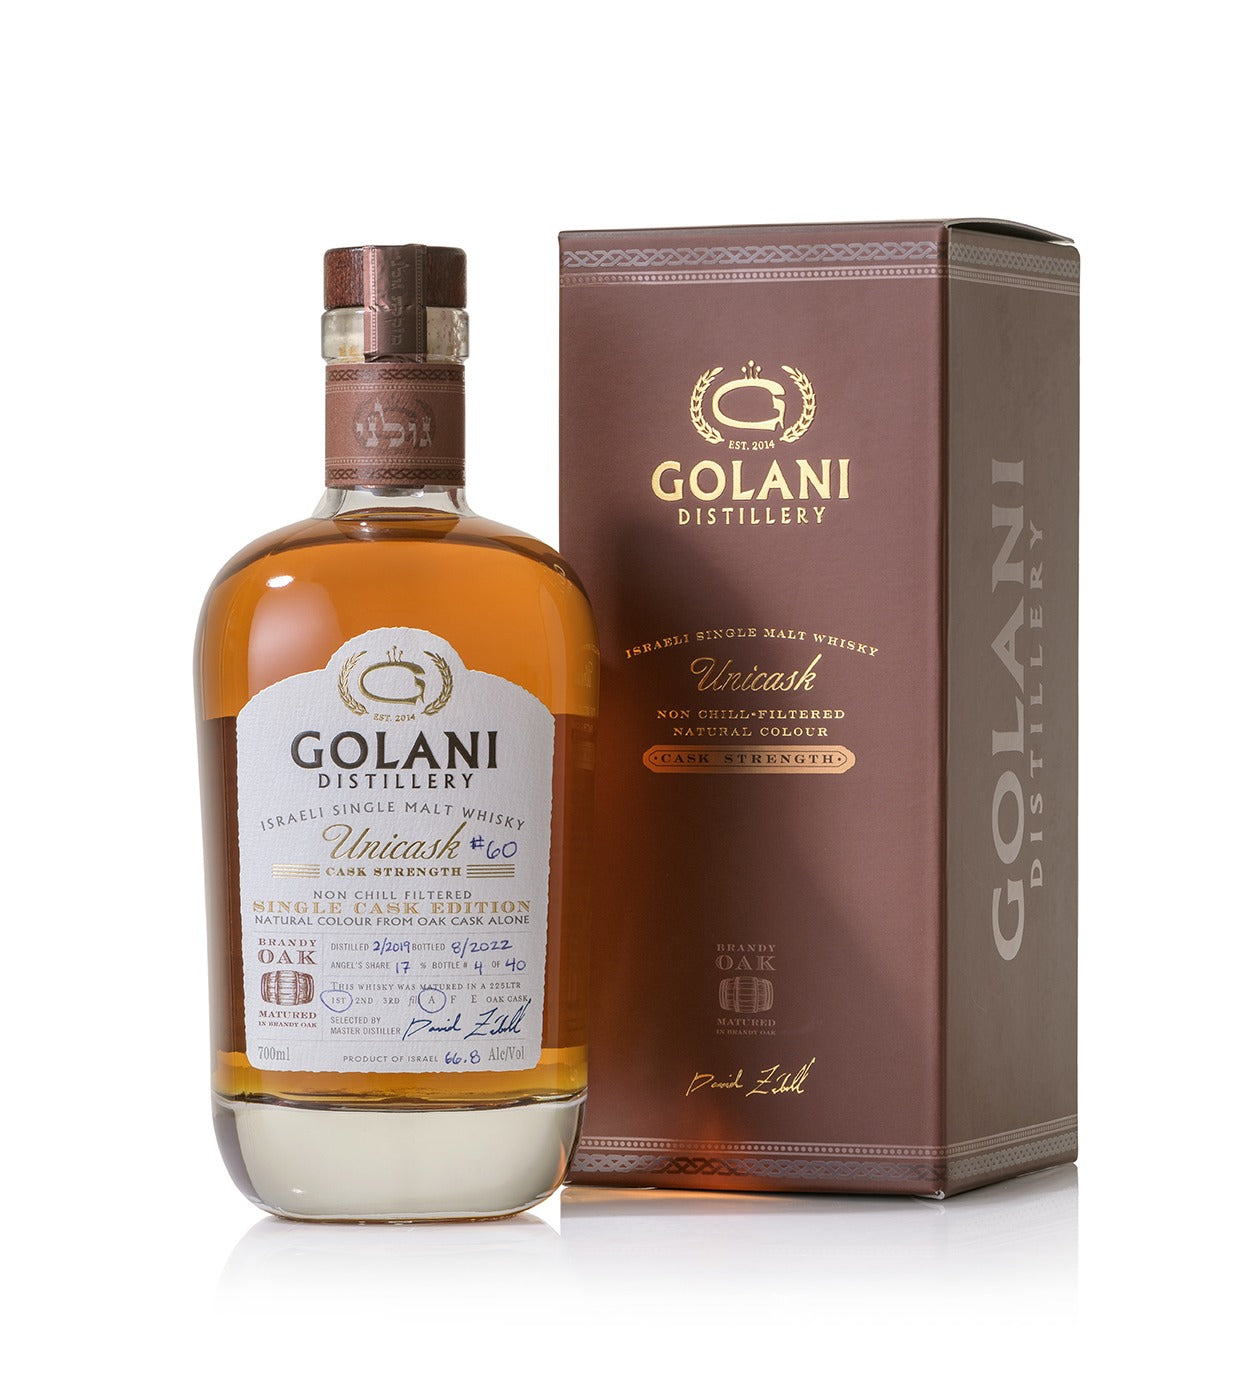 Golani Unicask Brandy Oak Cask Strength